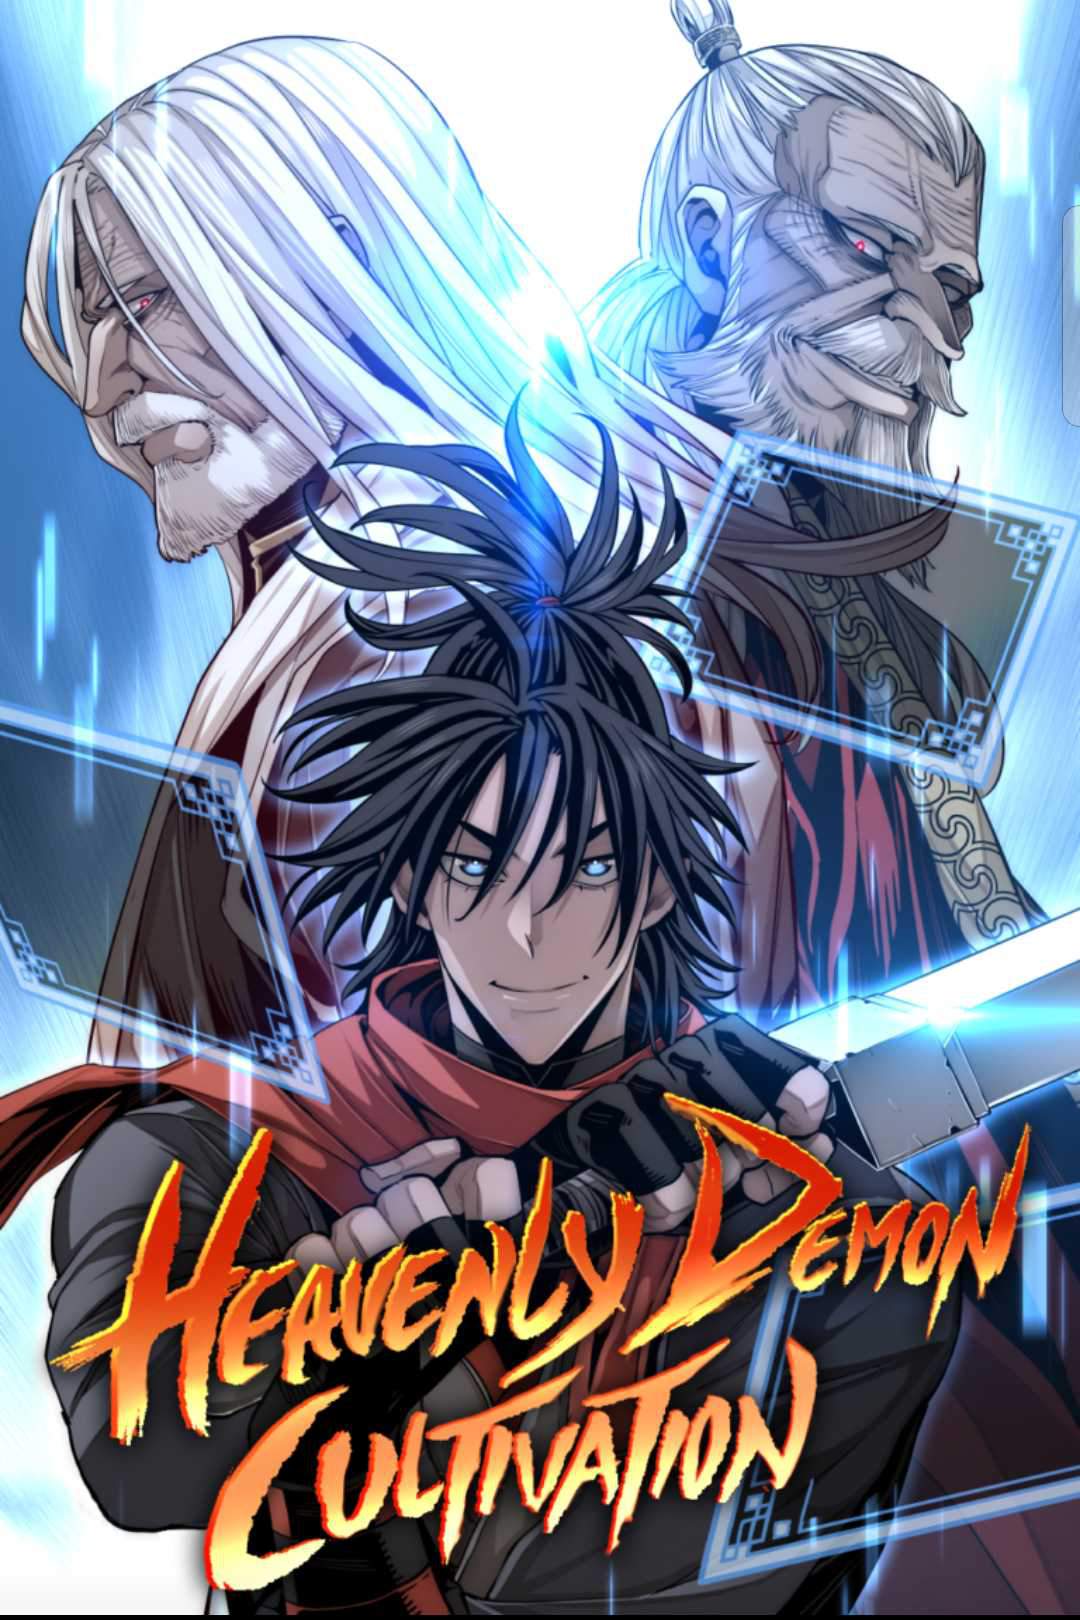 heavenly-demon-cultivation-simulation-003